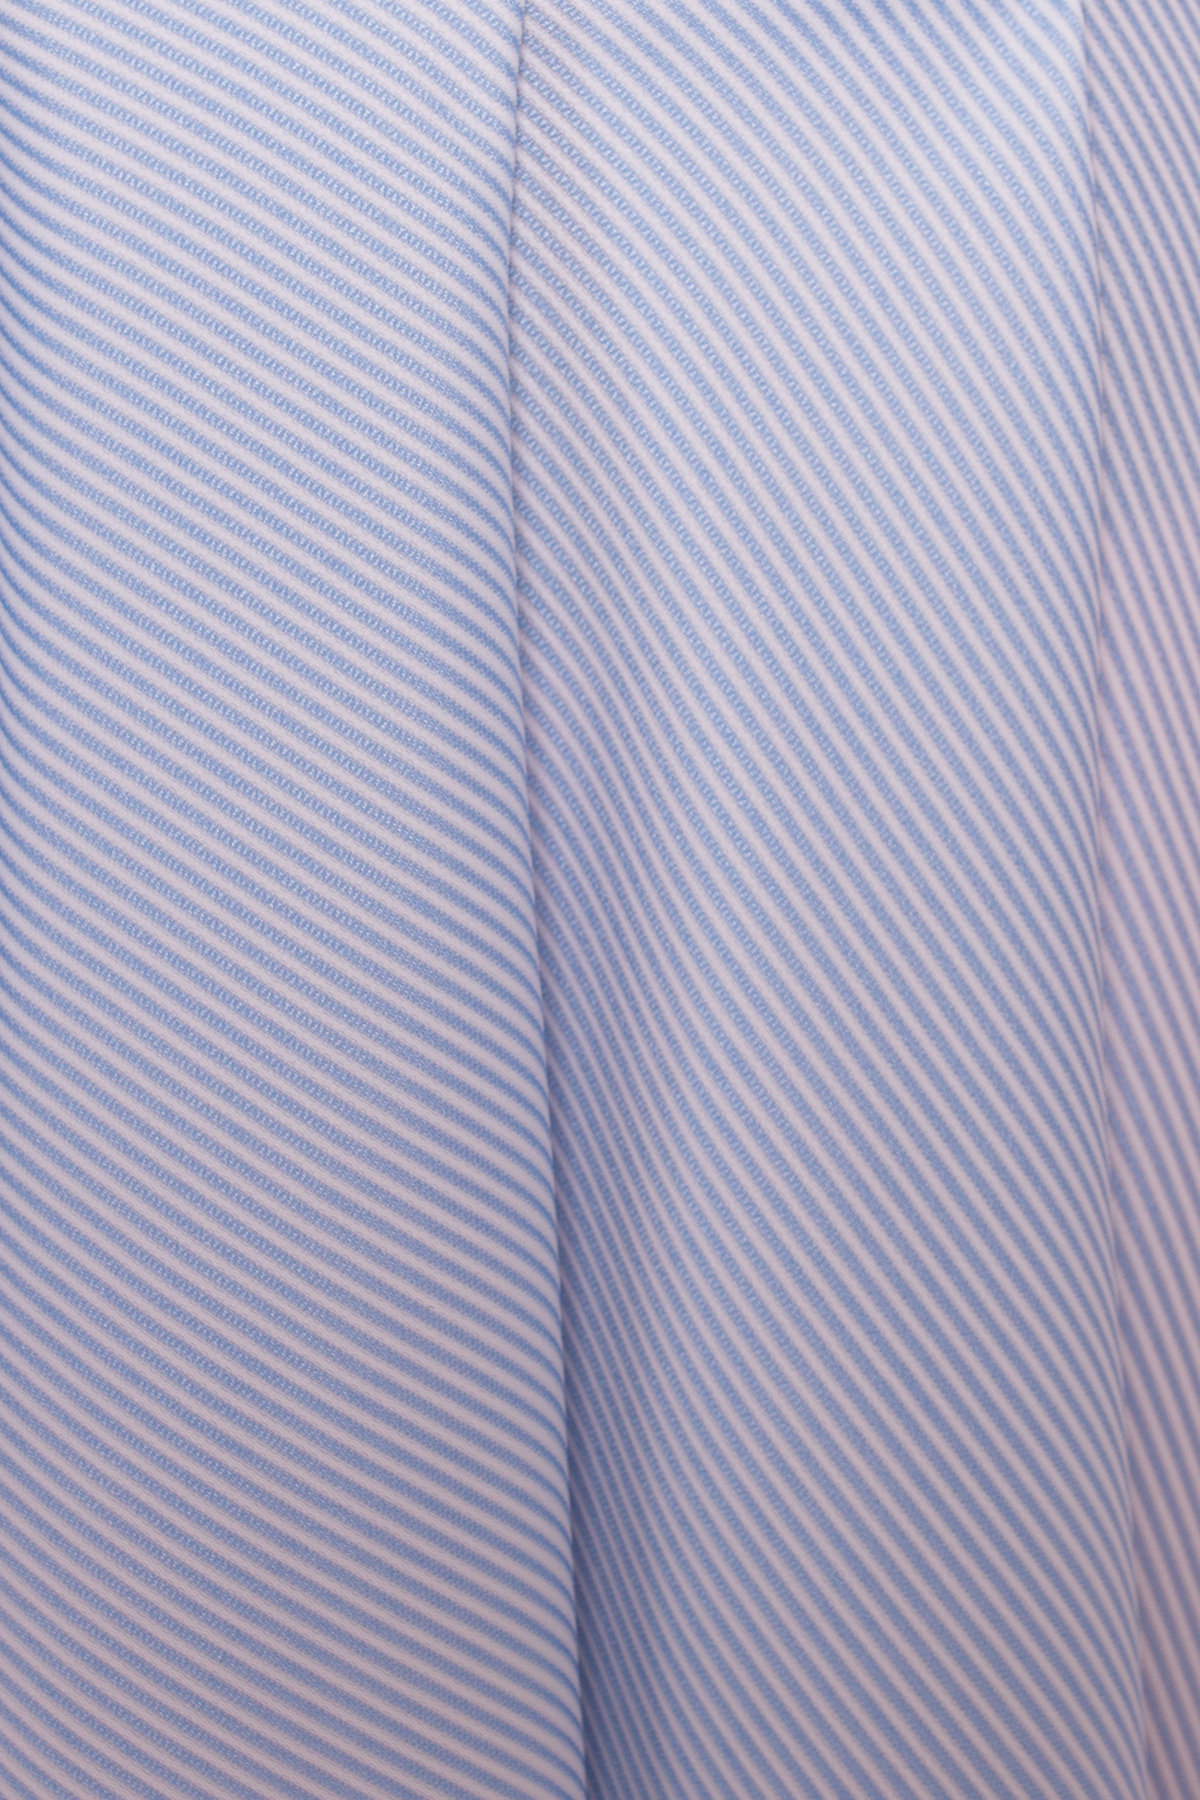 Платье-туника Феникс 5150 Цвет: Голубой/белый